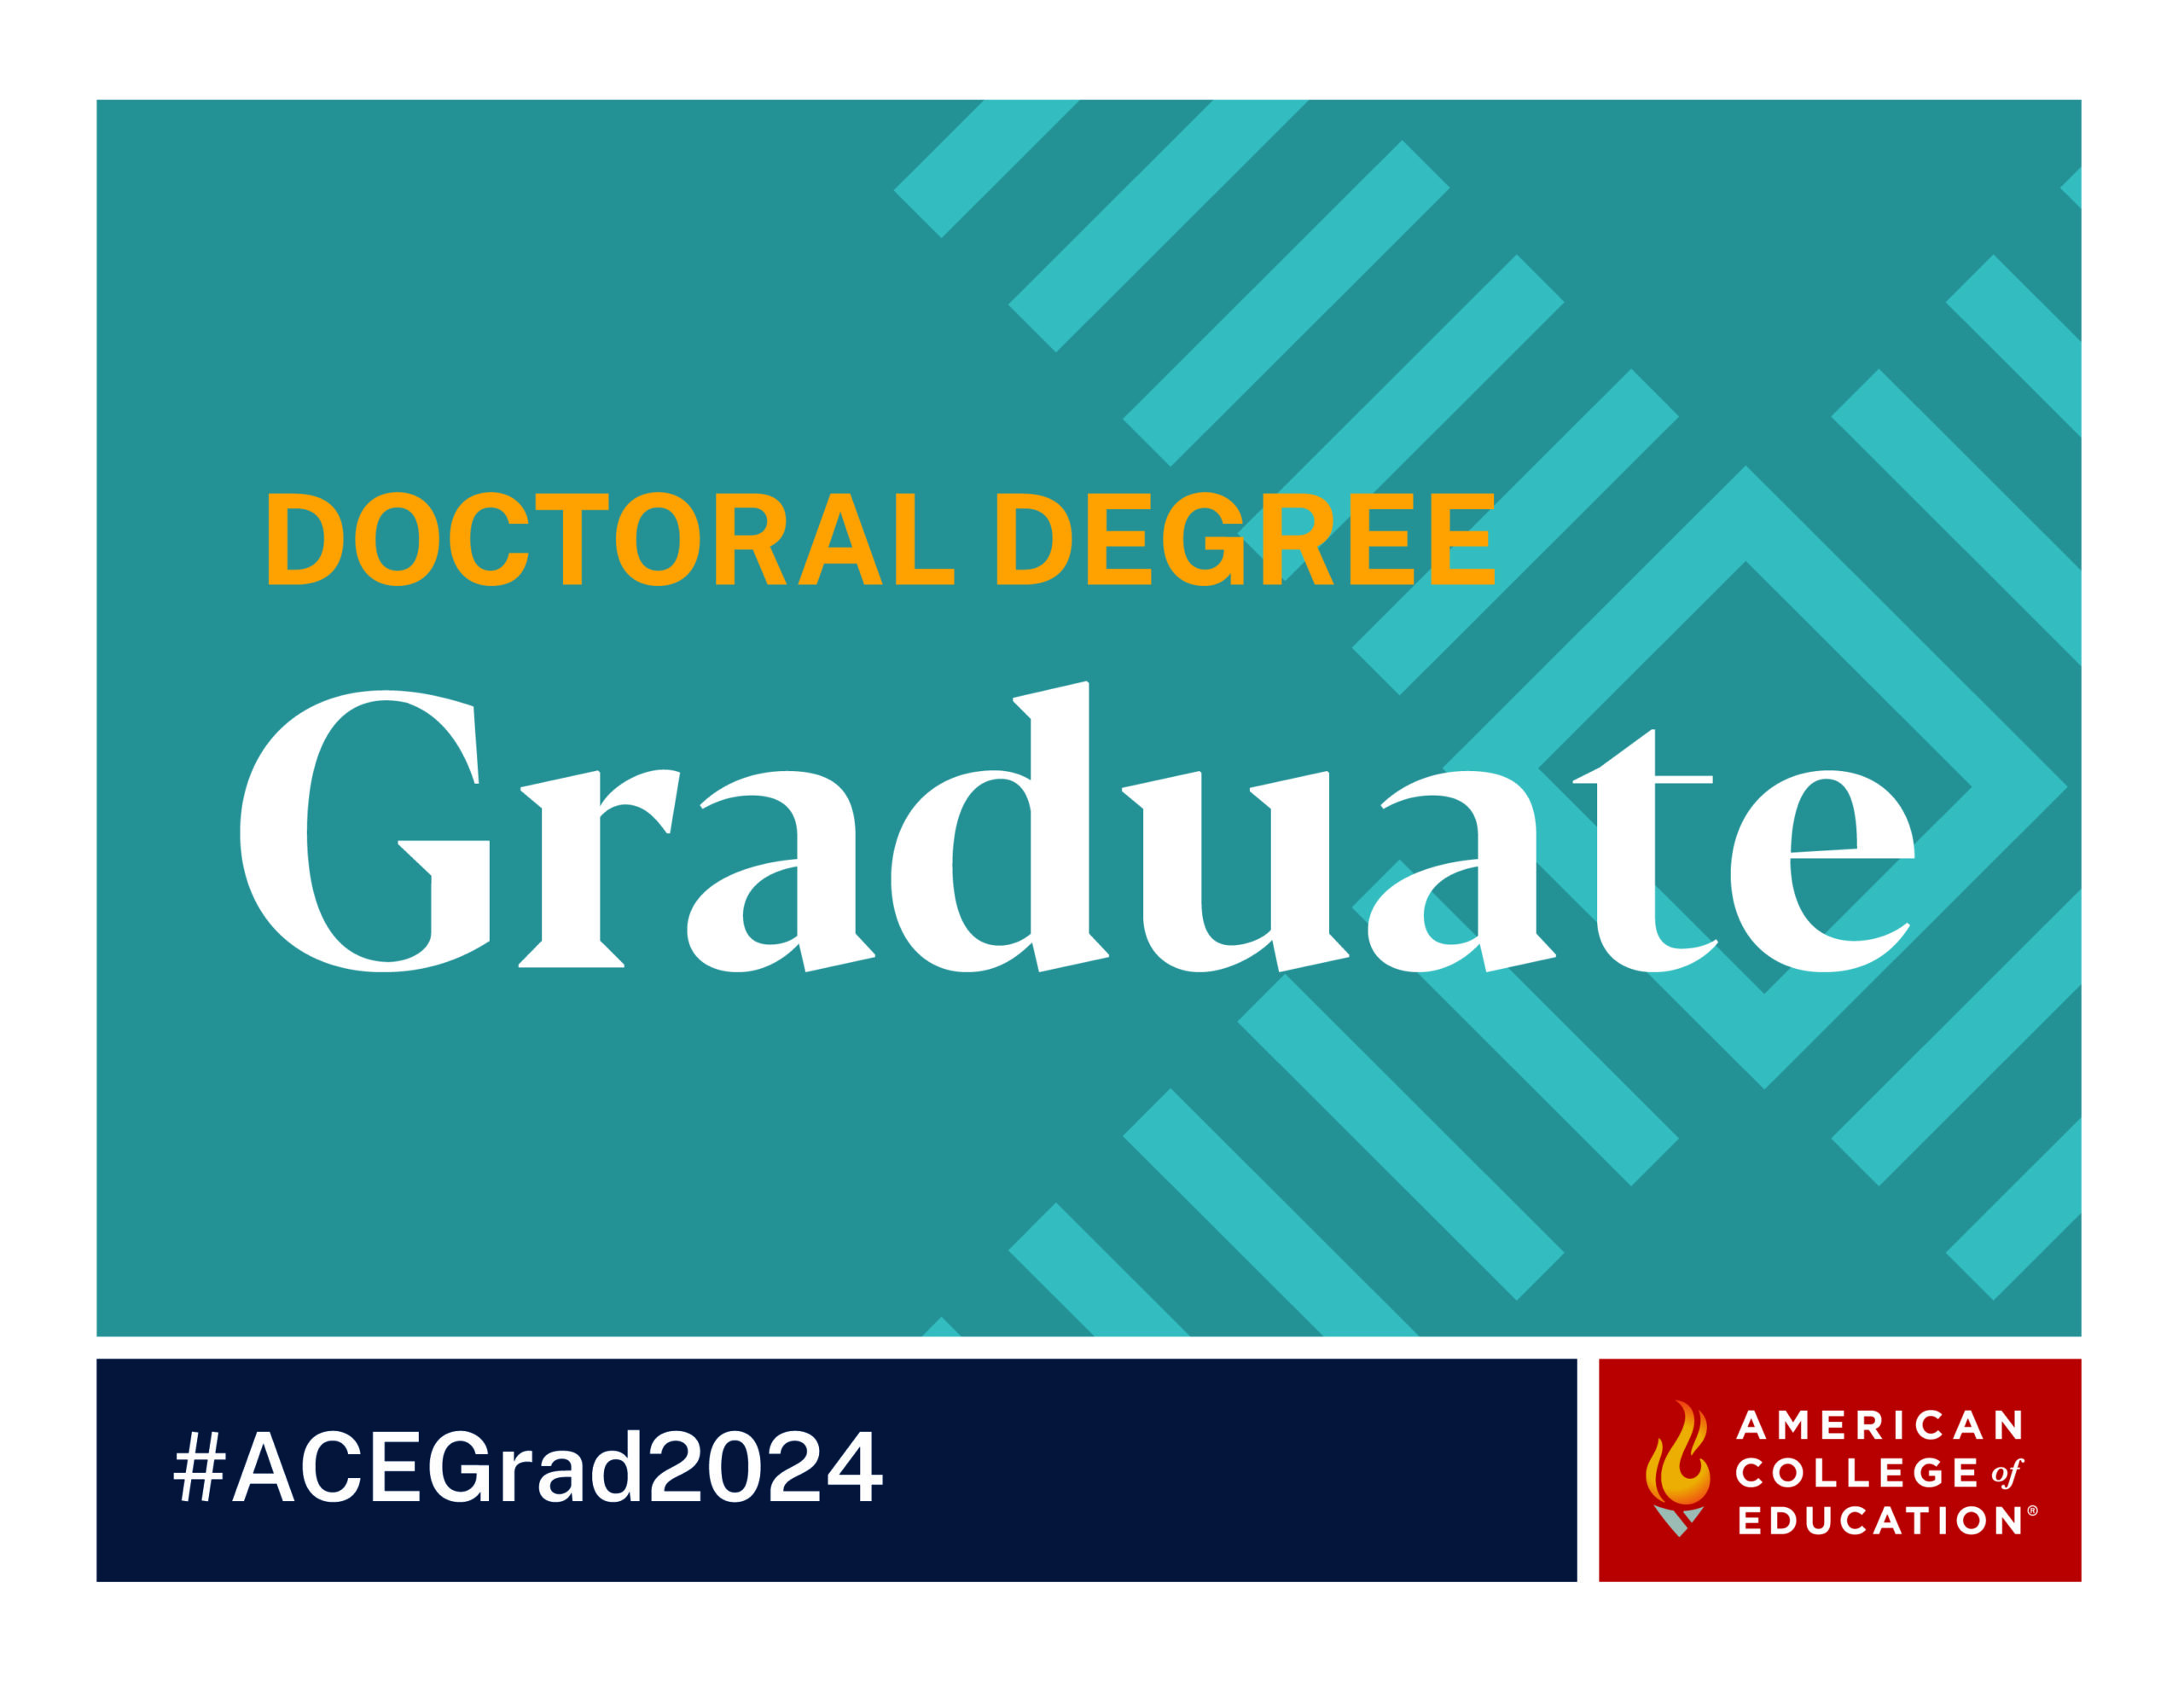 ACE Commencement 2024 - Doctoral Degree Graduate